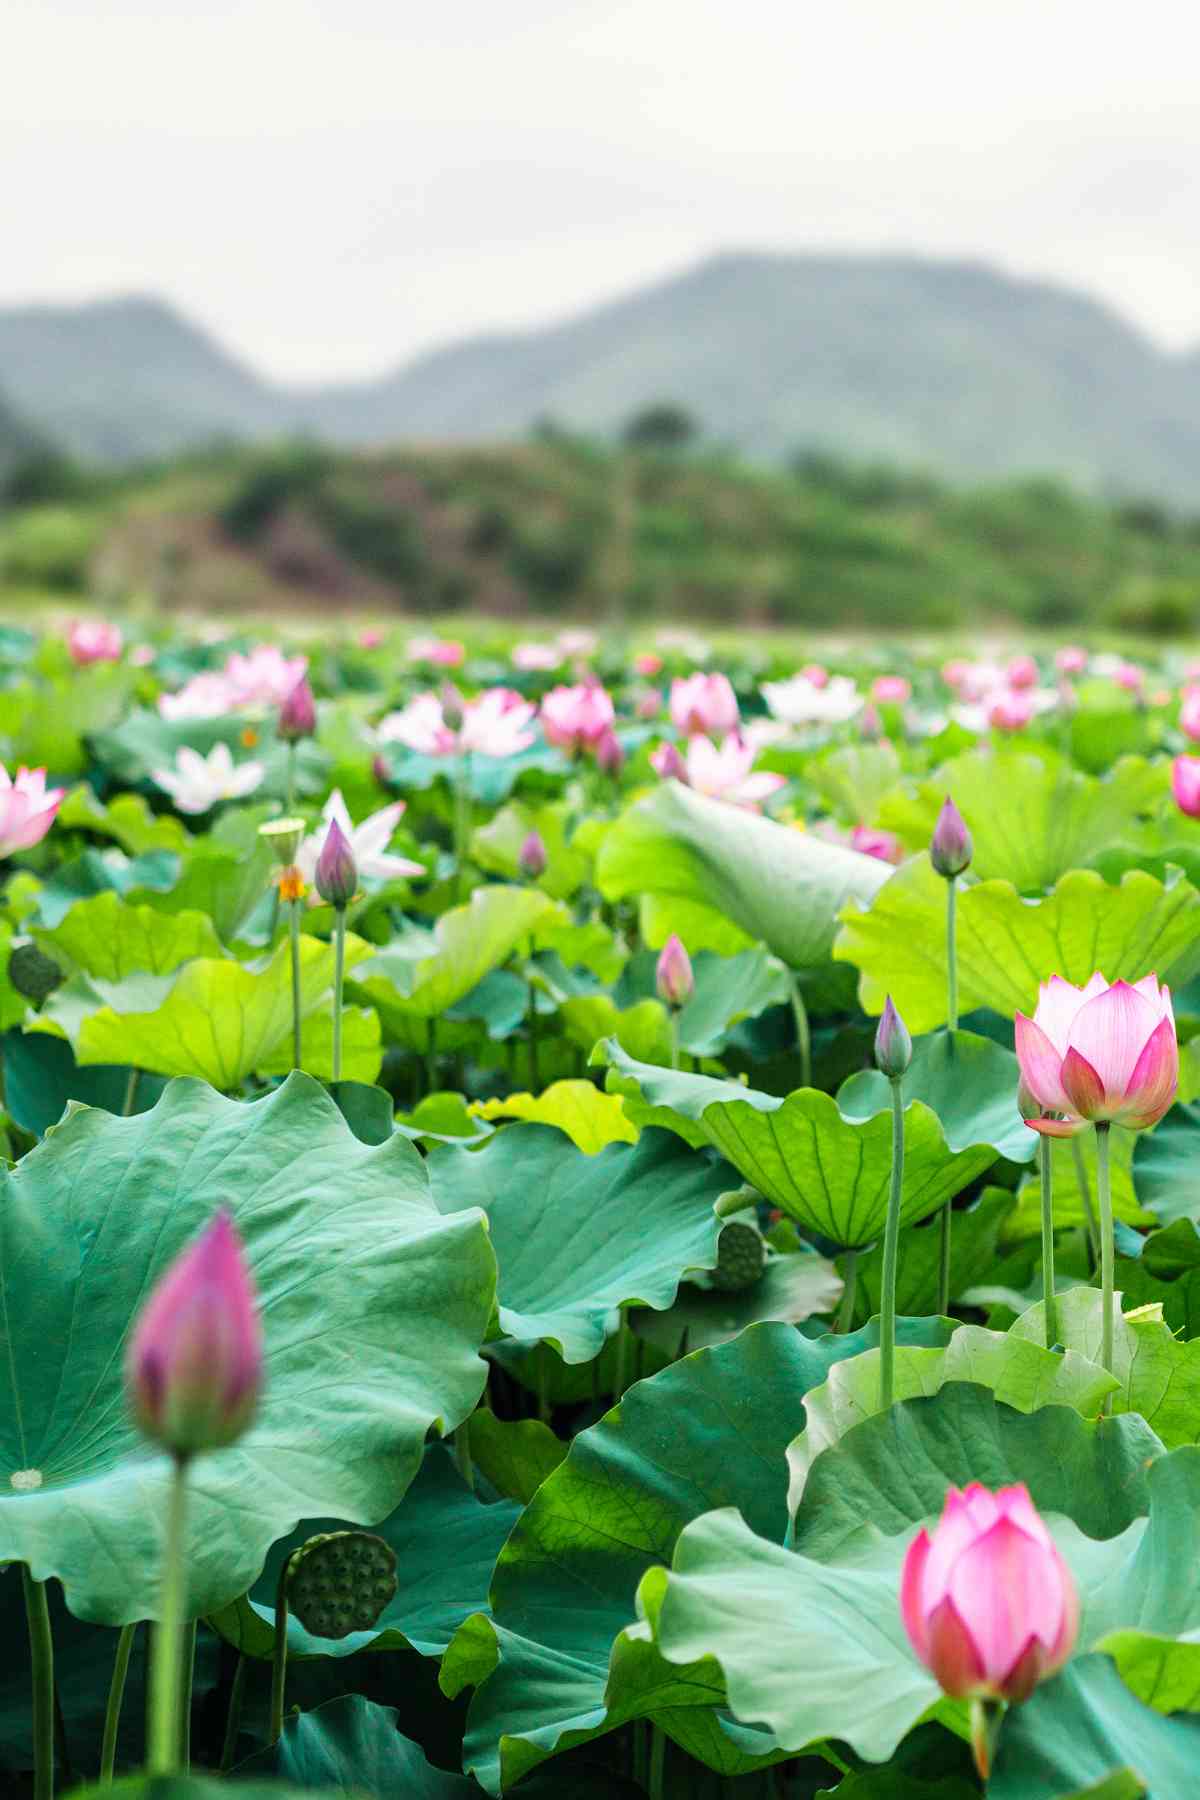 lotus plant